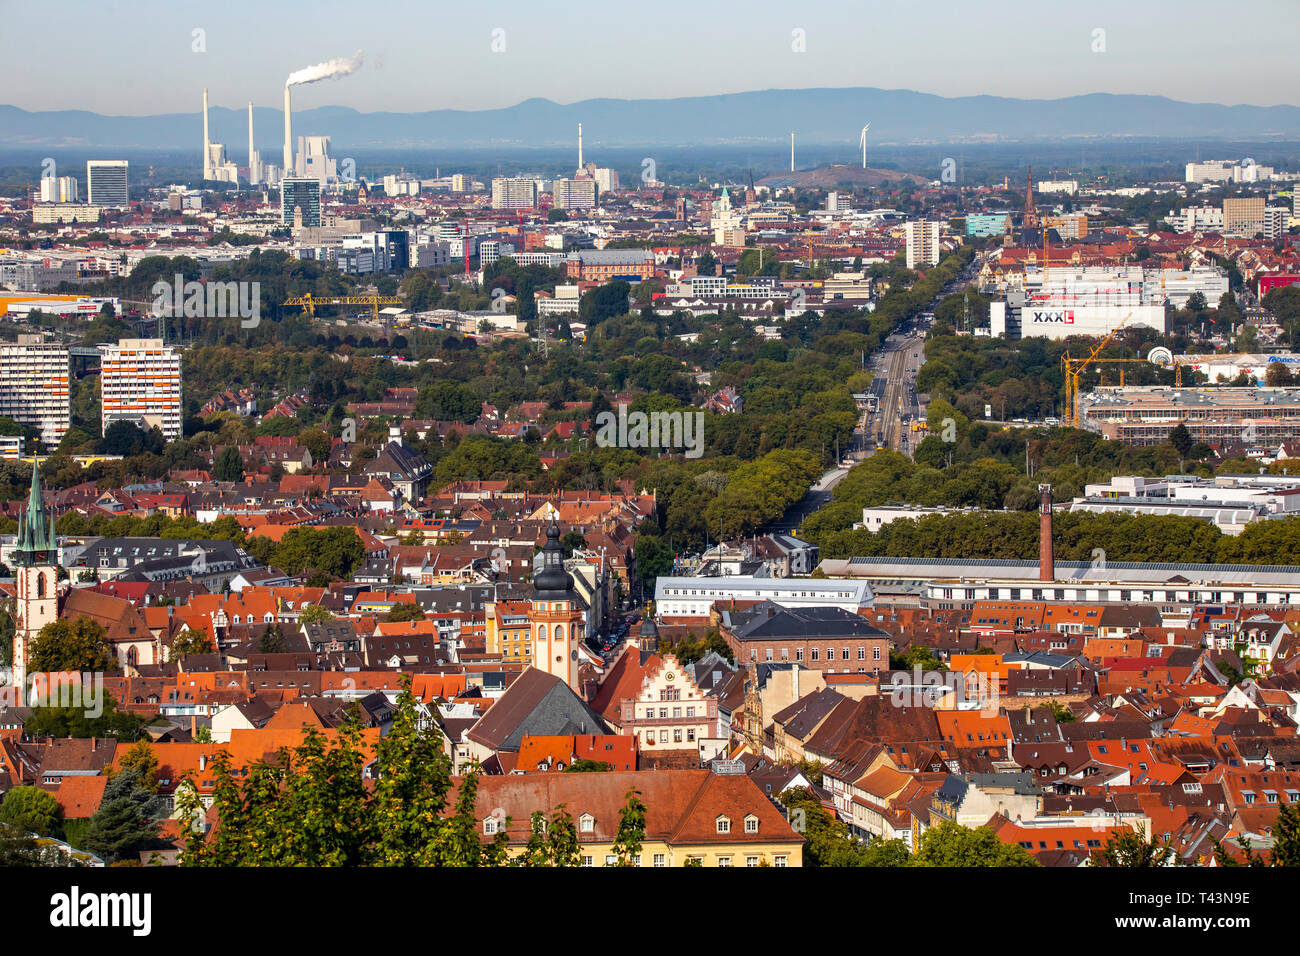 View over Karlsruhe, inner city, residential skyscrapers, behind the Rheinhafen steam power plant Karlsruhe, Stock Photo